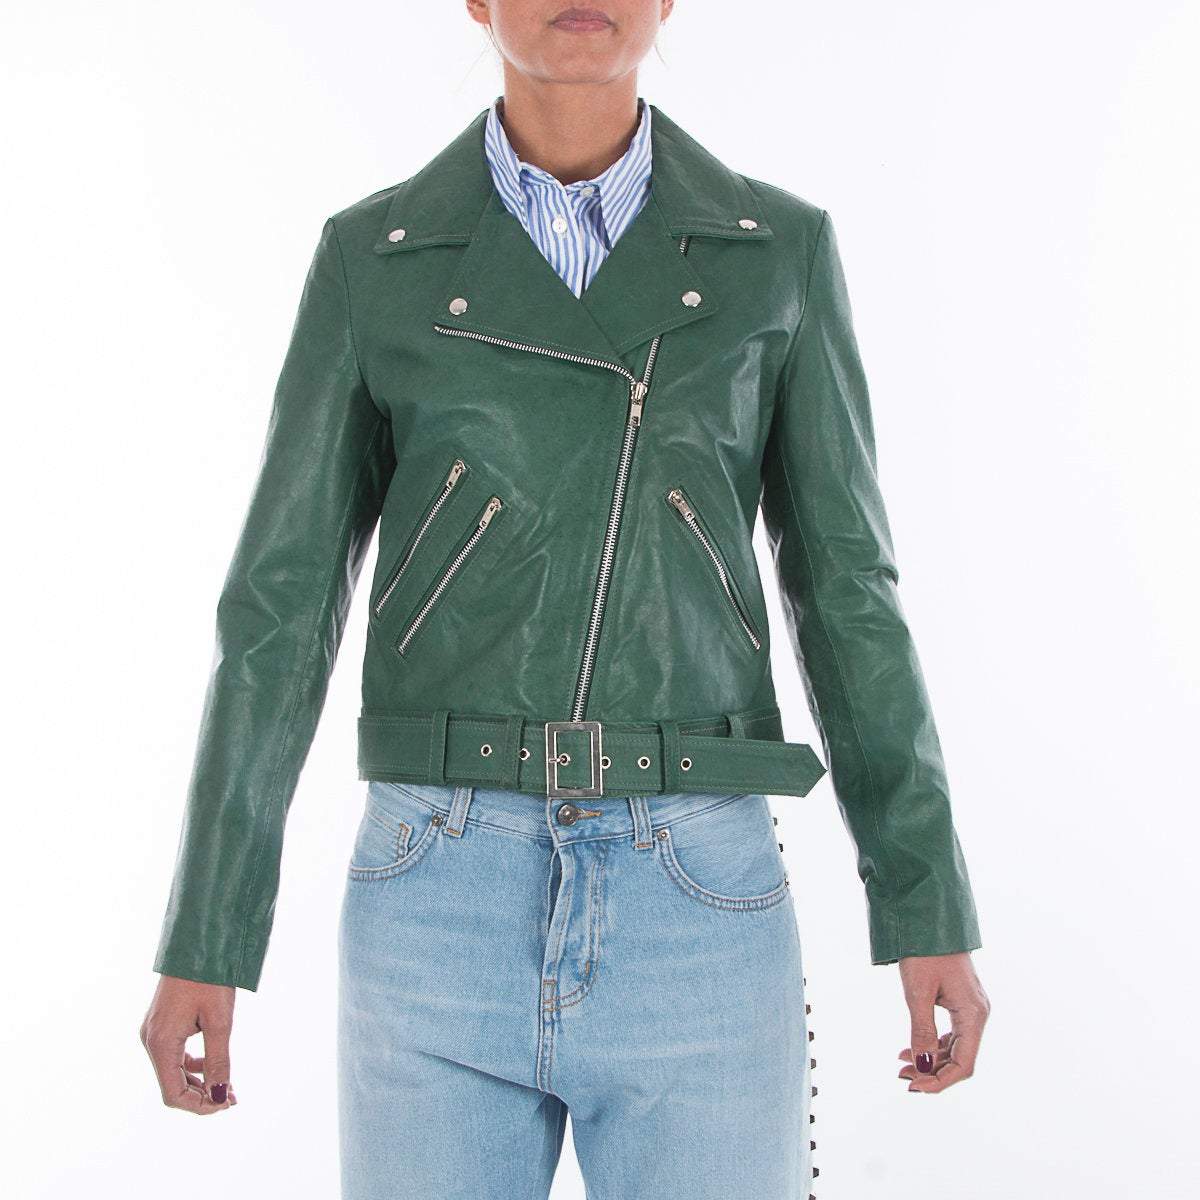 Darby Street Nylon Jacket, Green Jacket, Nylon Jacket, 40 Bust, Vintage,  Ladies Vintage, Women's Vintage, Small, Lazy Day Vintage 